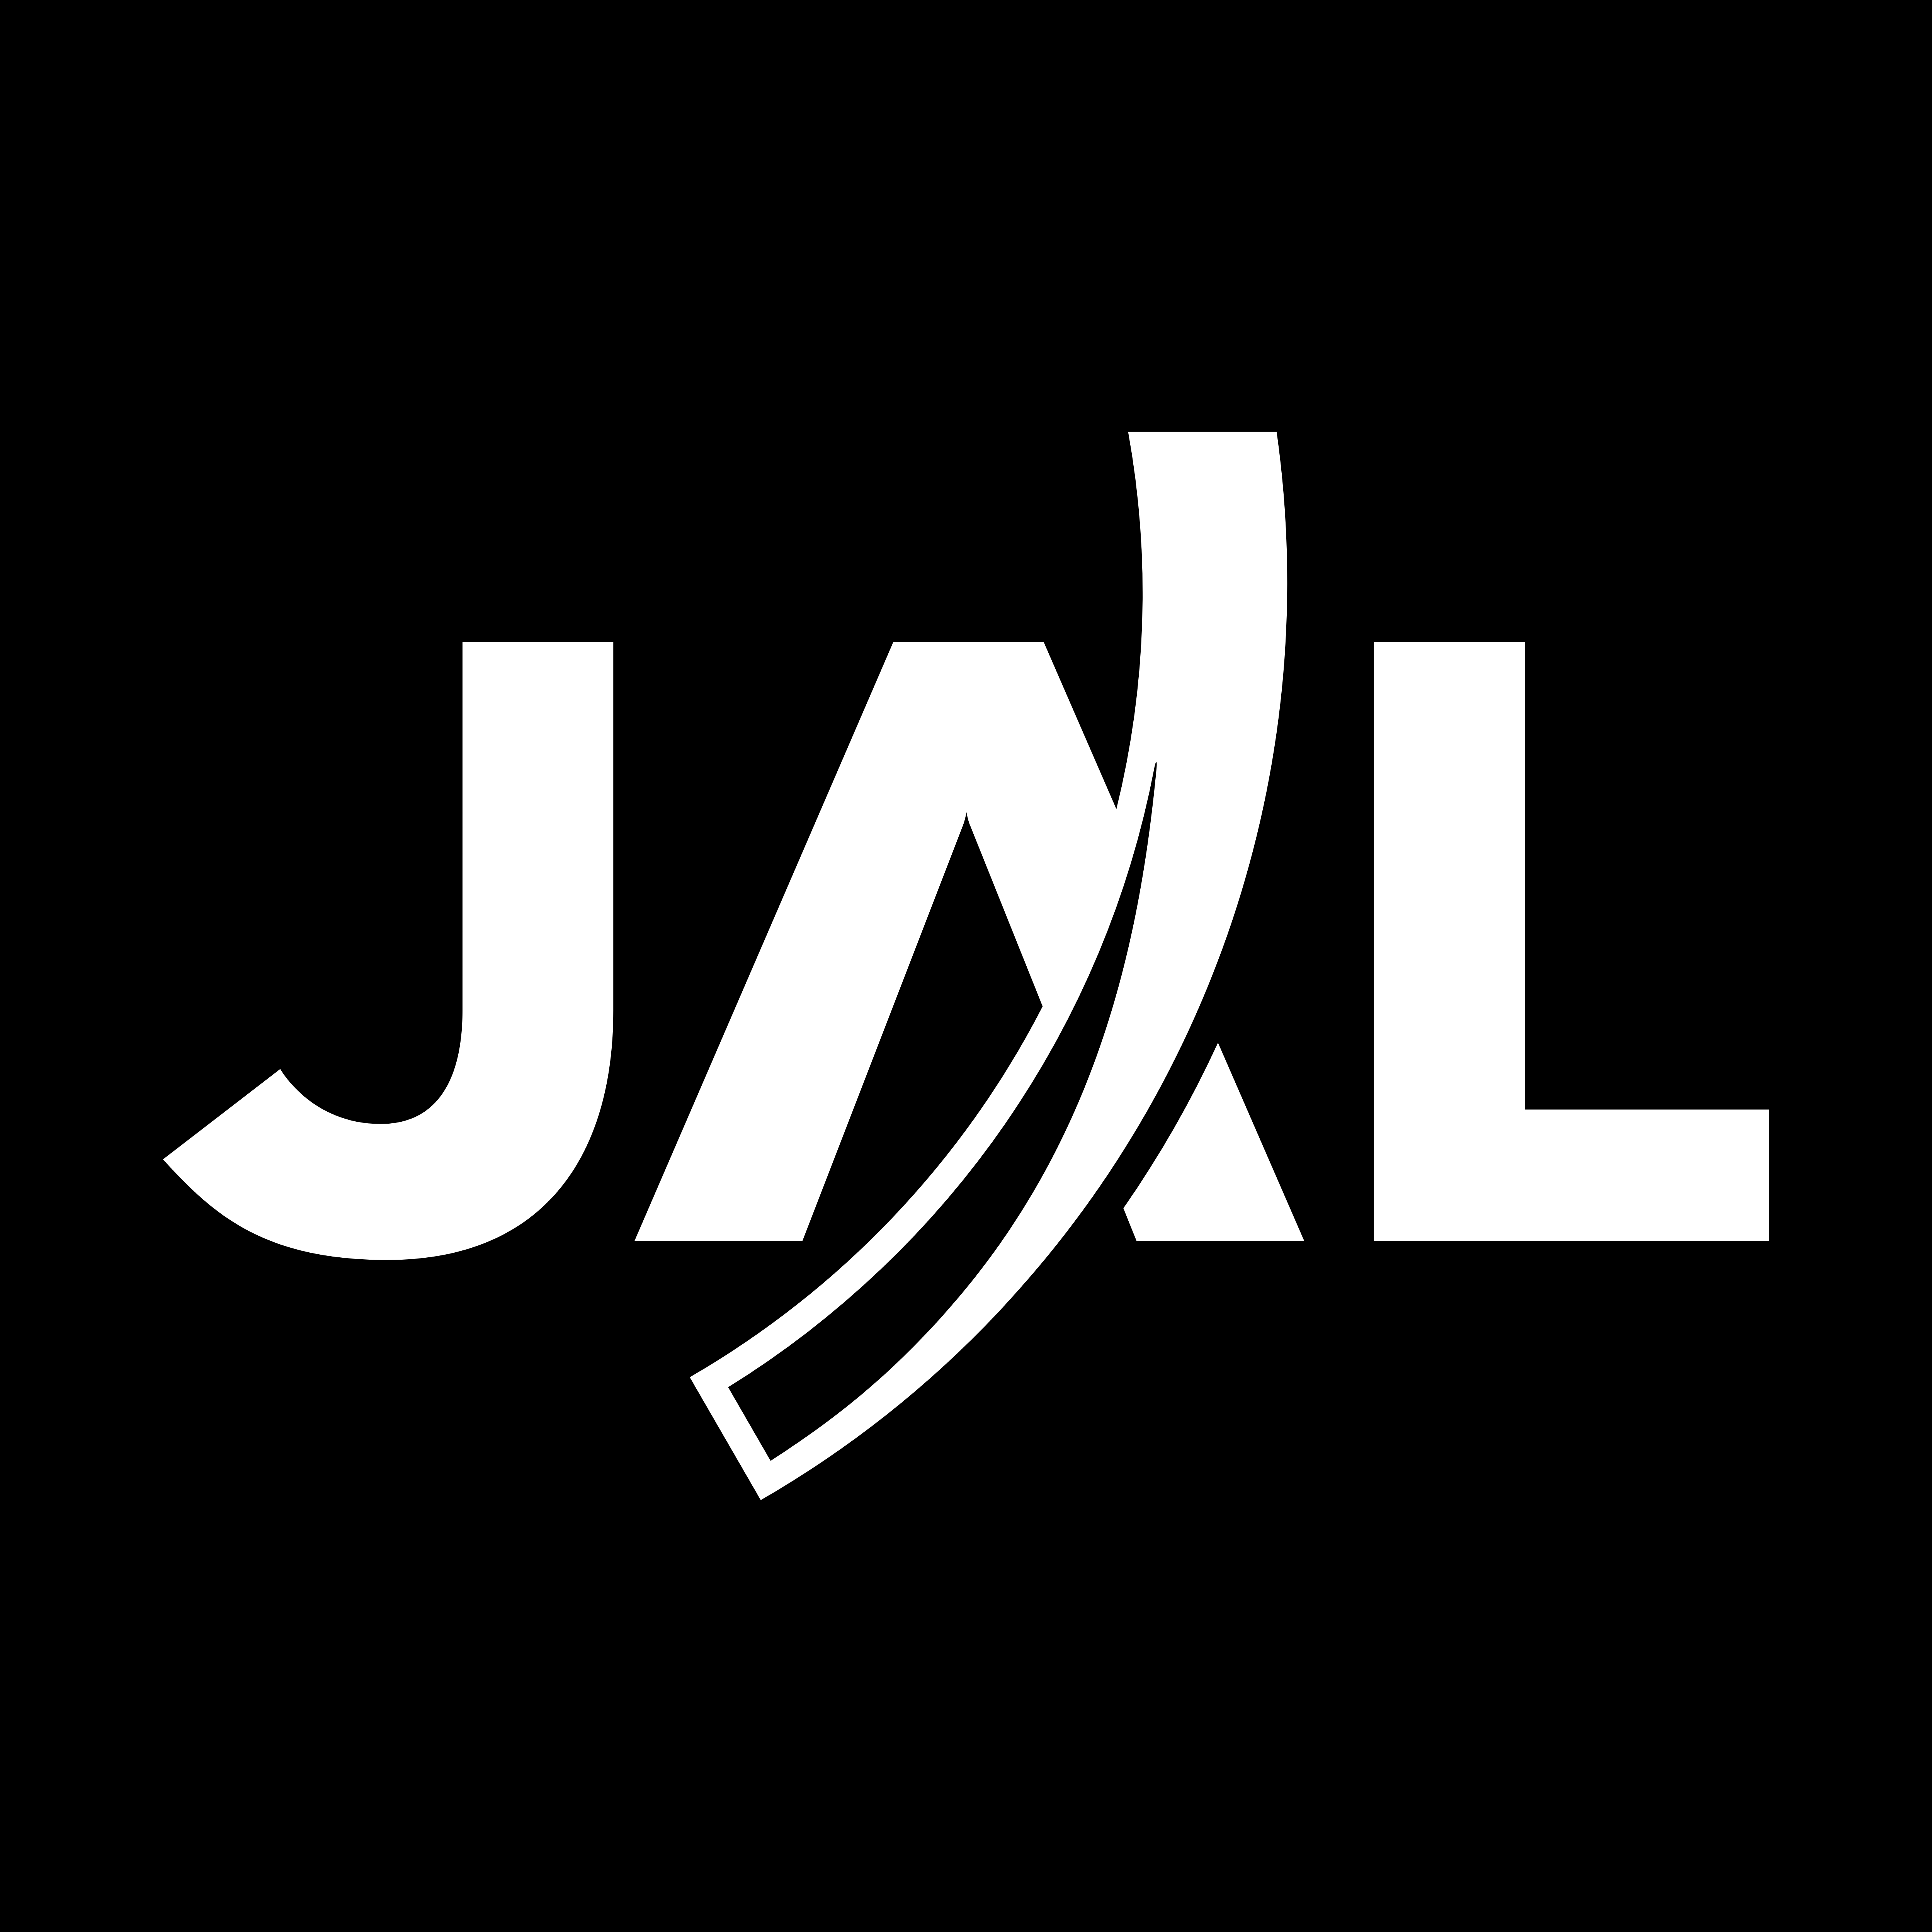 Japan Airlines – Logos Download